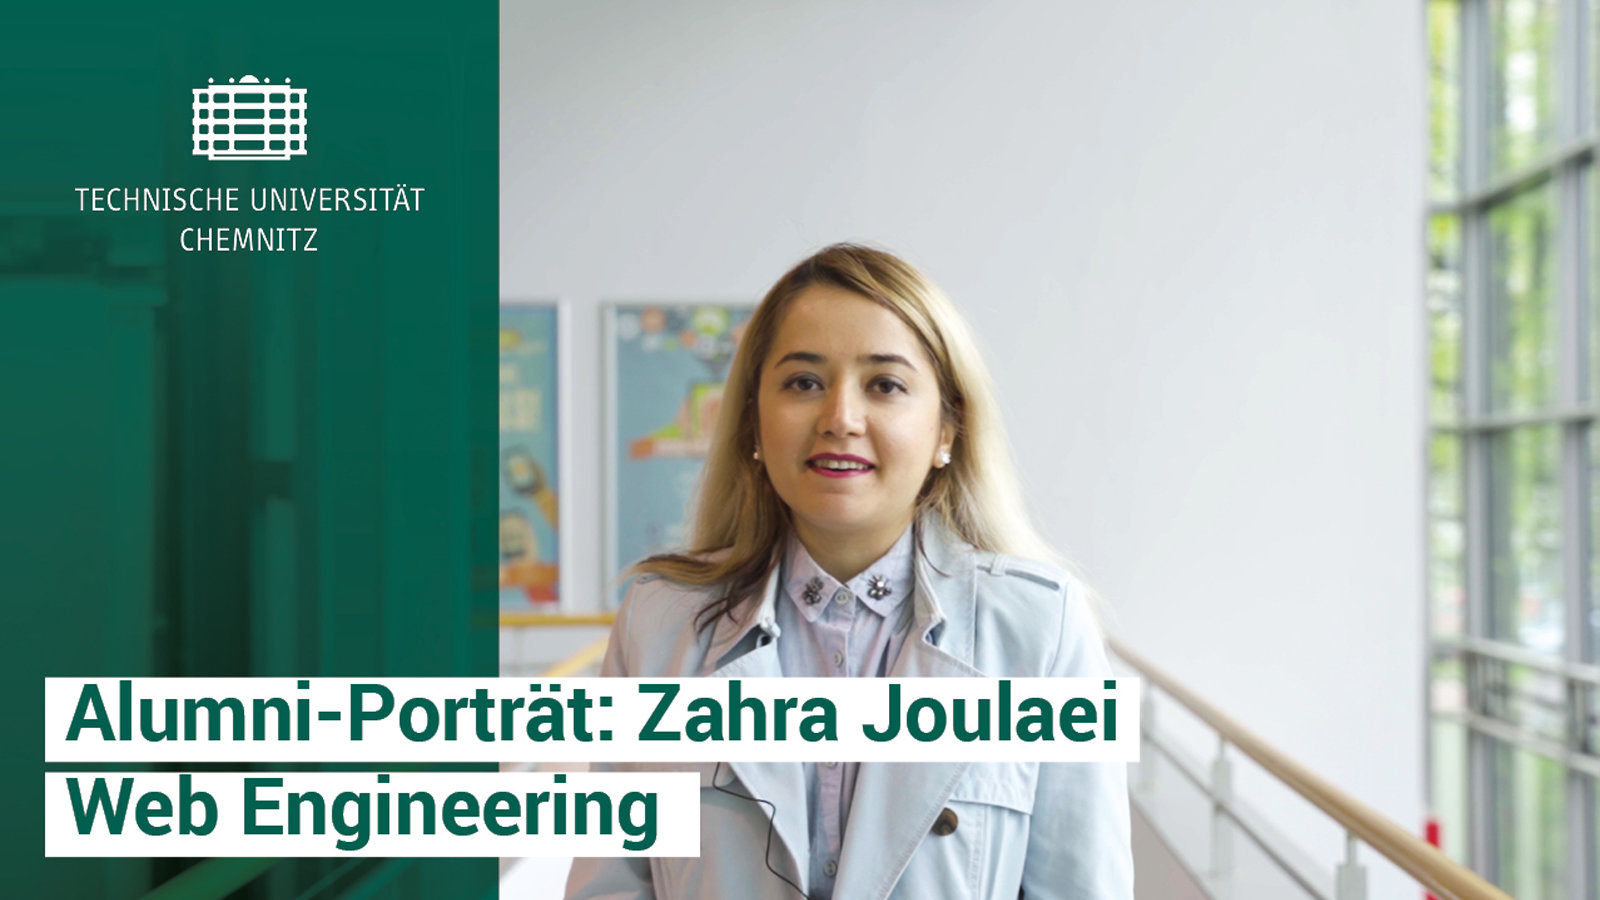 Portrait of Zahra Joulaei